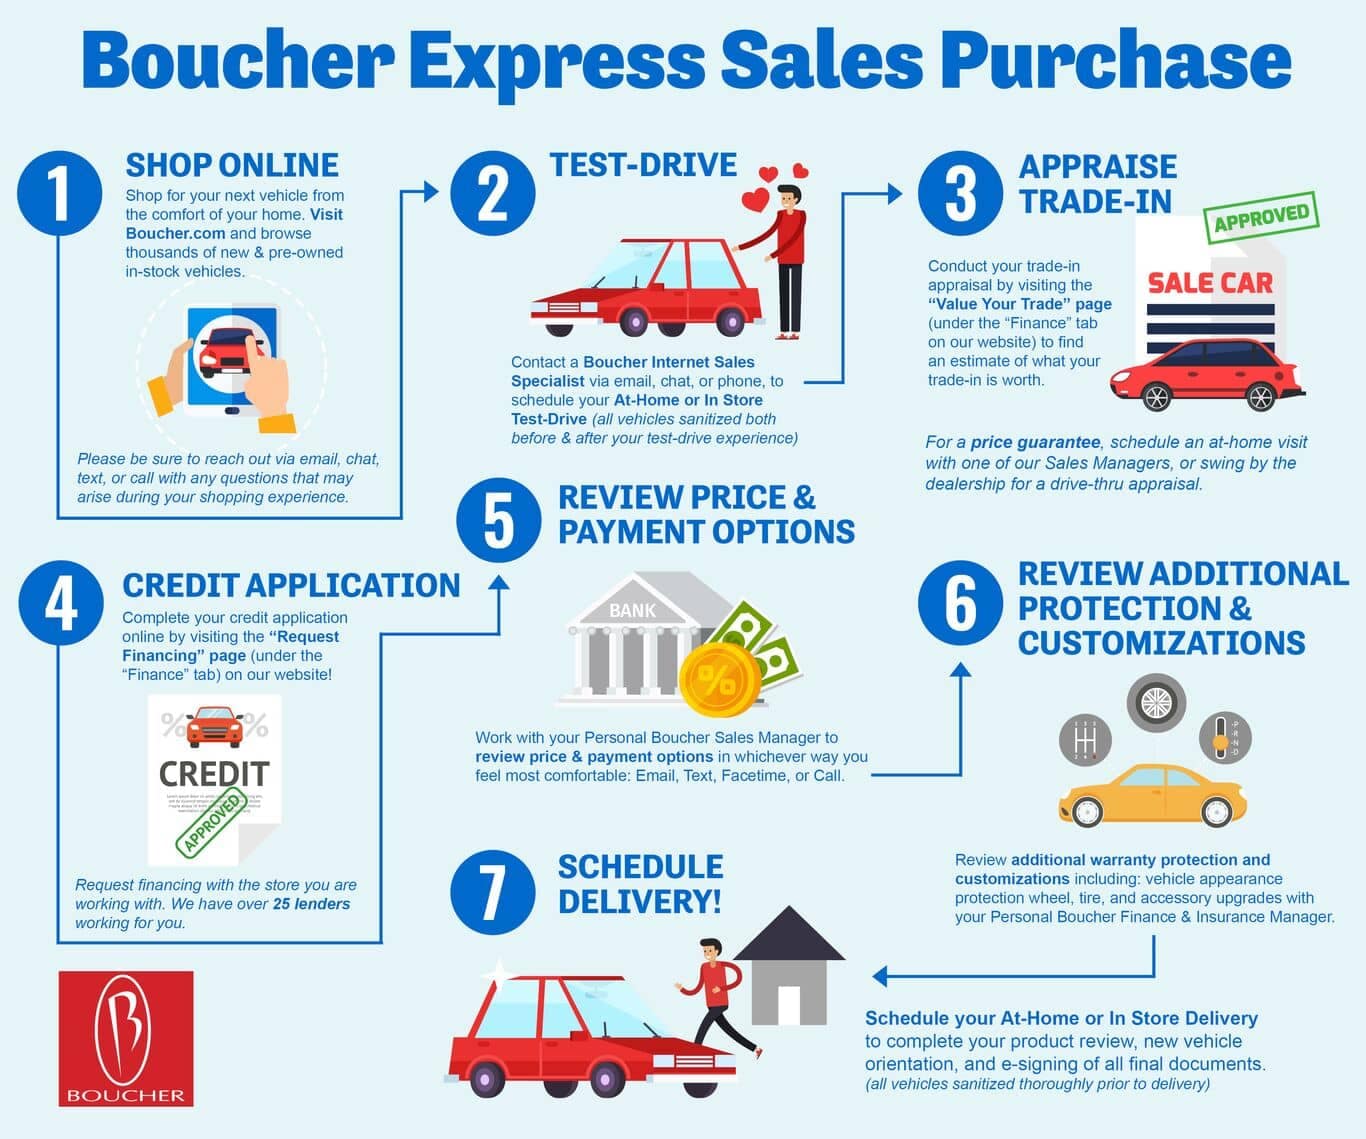 Boucher Express Sales Info graphic